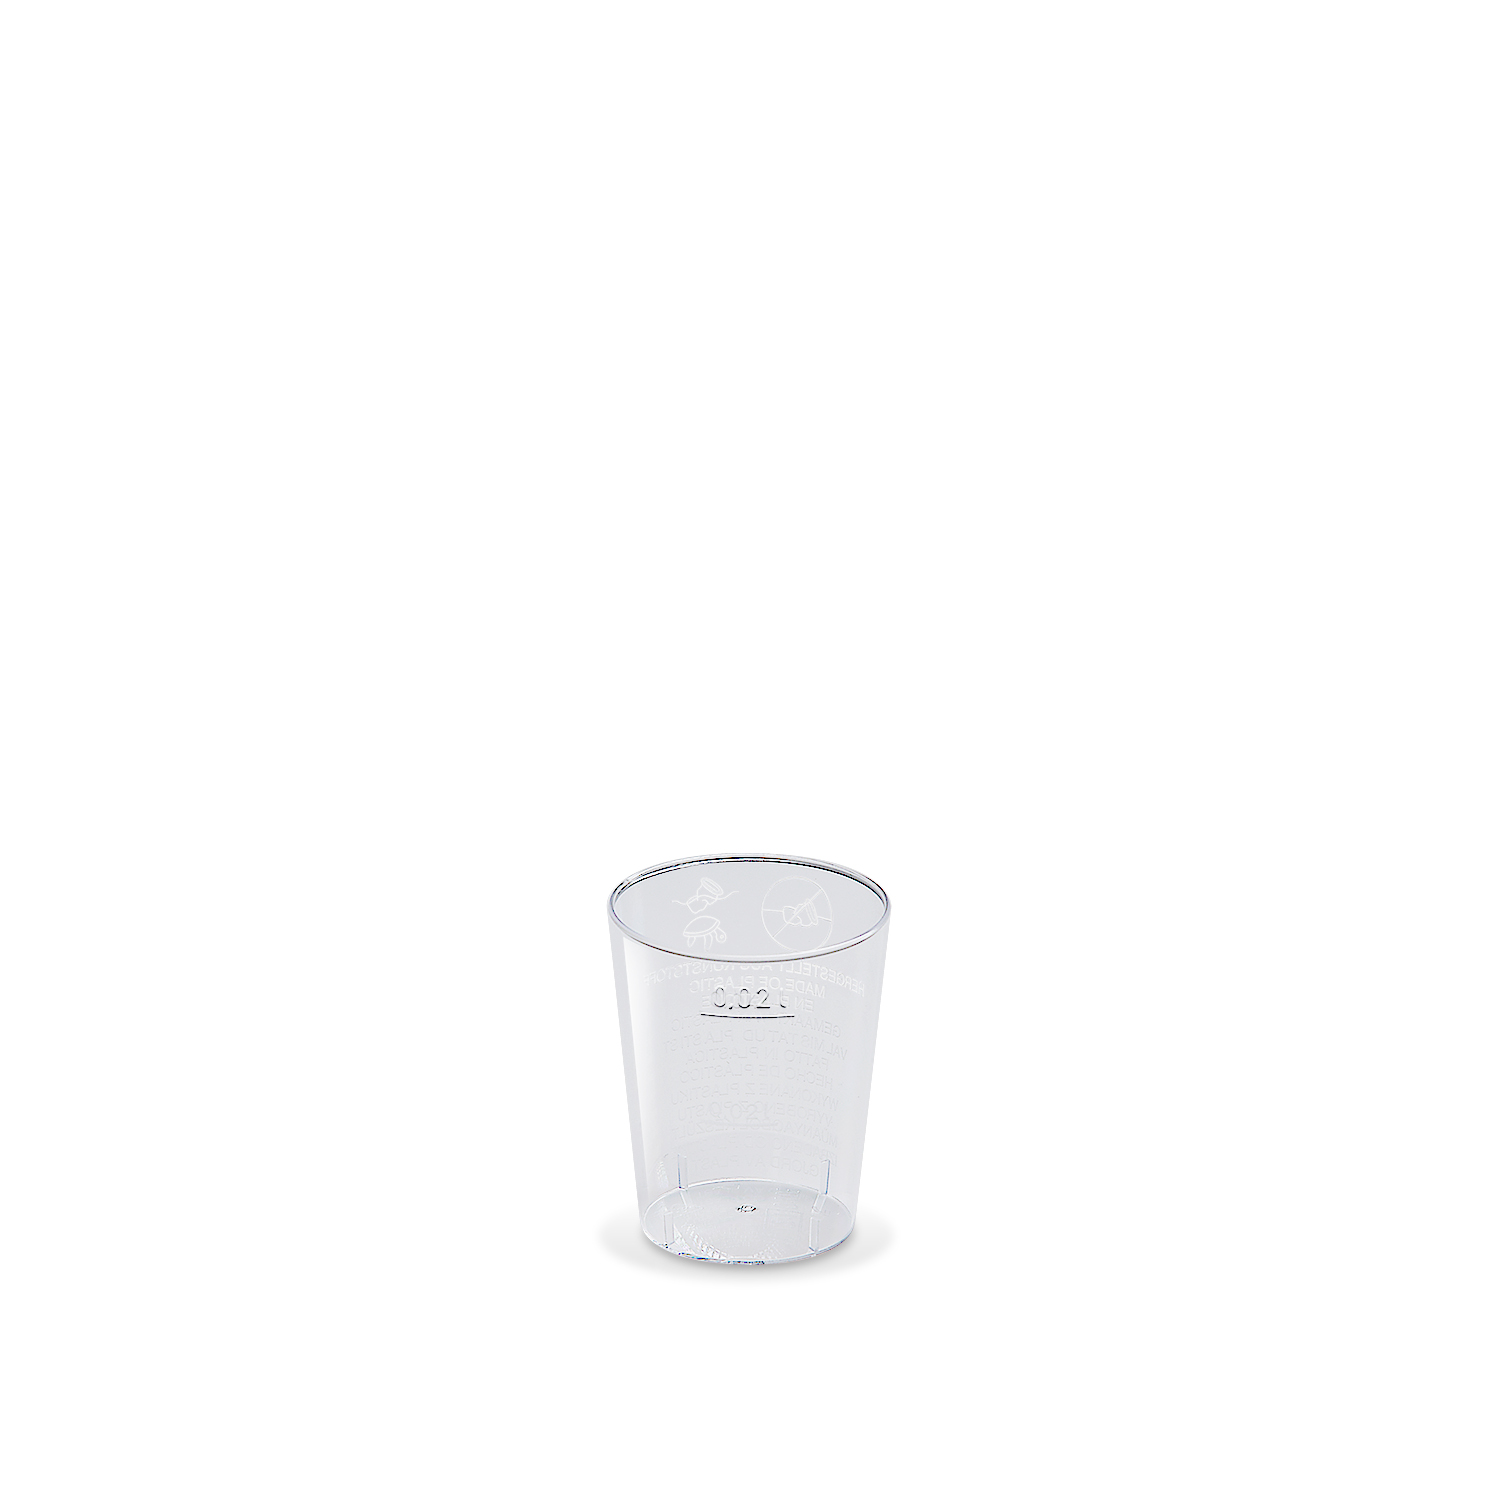 Schnapsglas 2cl, PS, 50 Stück/Packung